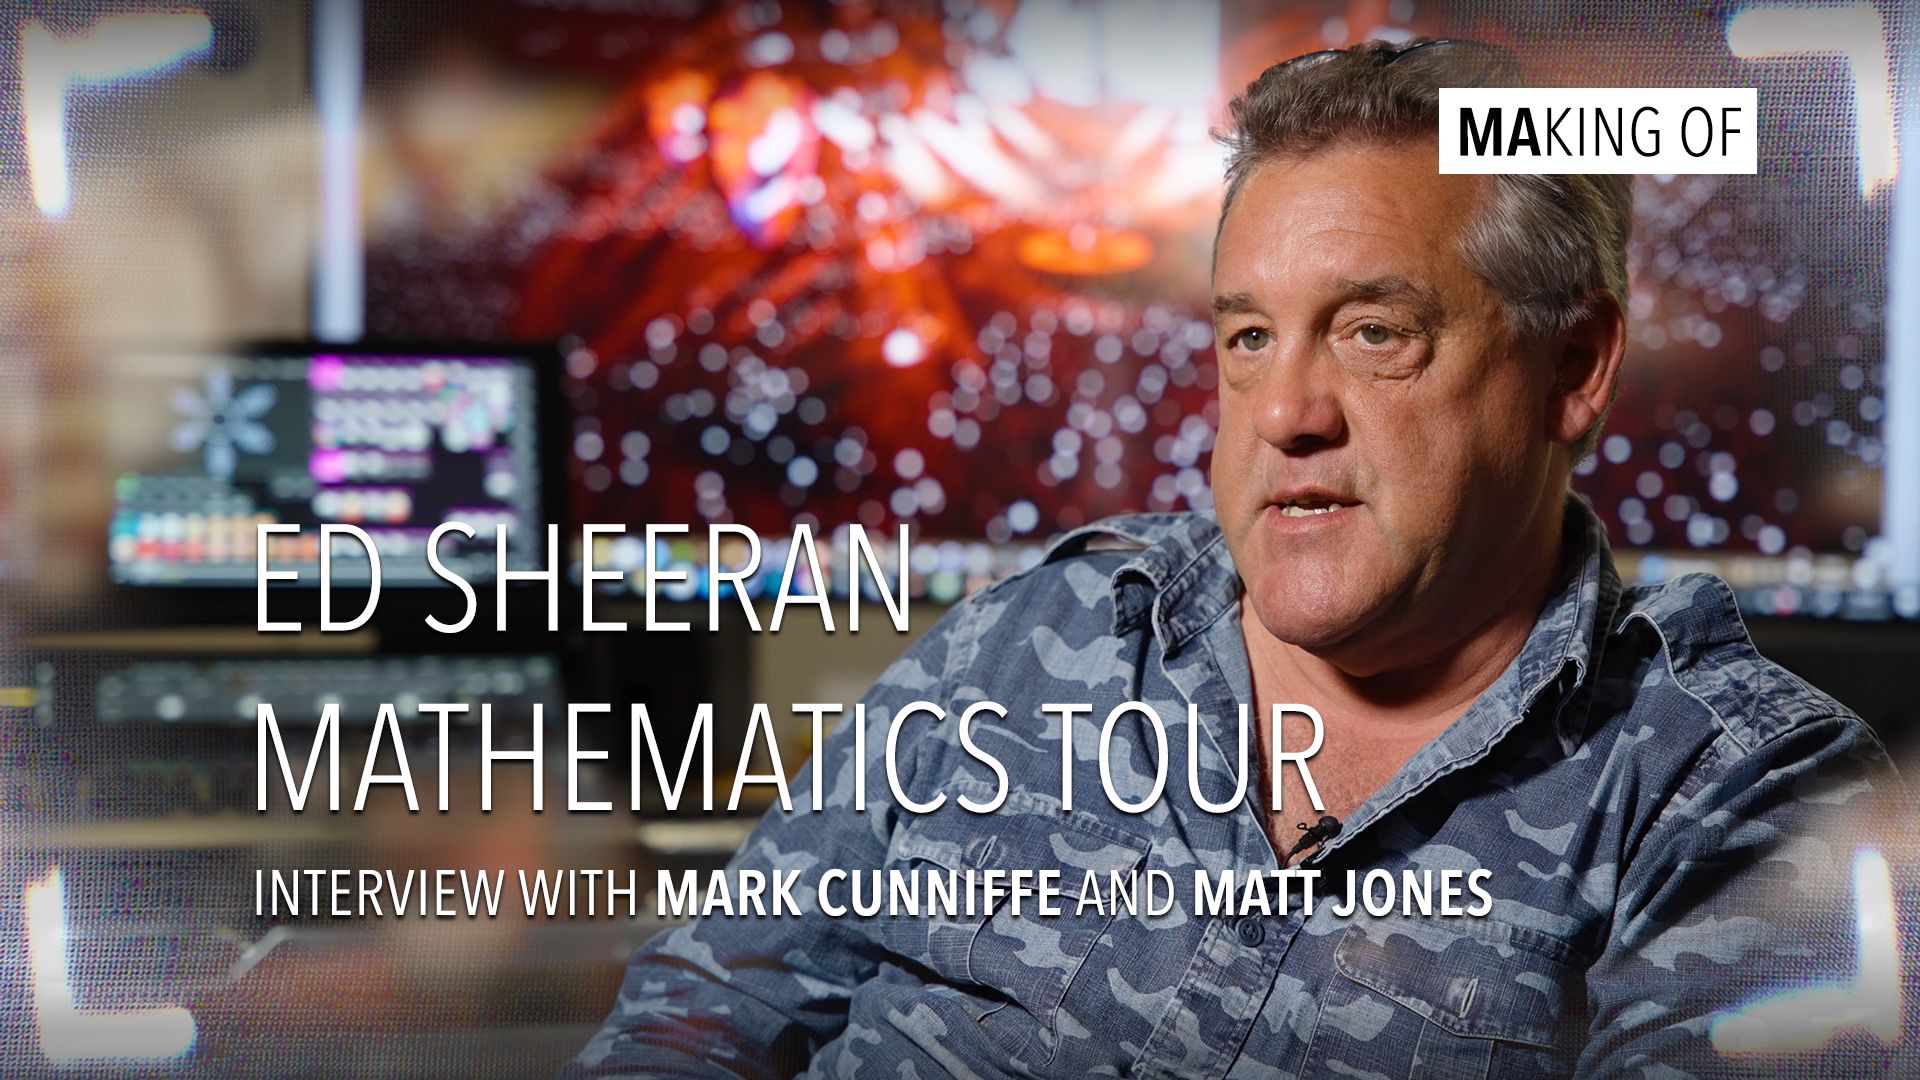 Making of – Ed Sheeran Mathematics Tour | Interview with Mark Cunniffe and Matt Jones